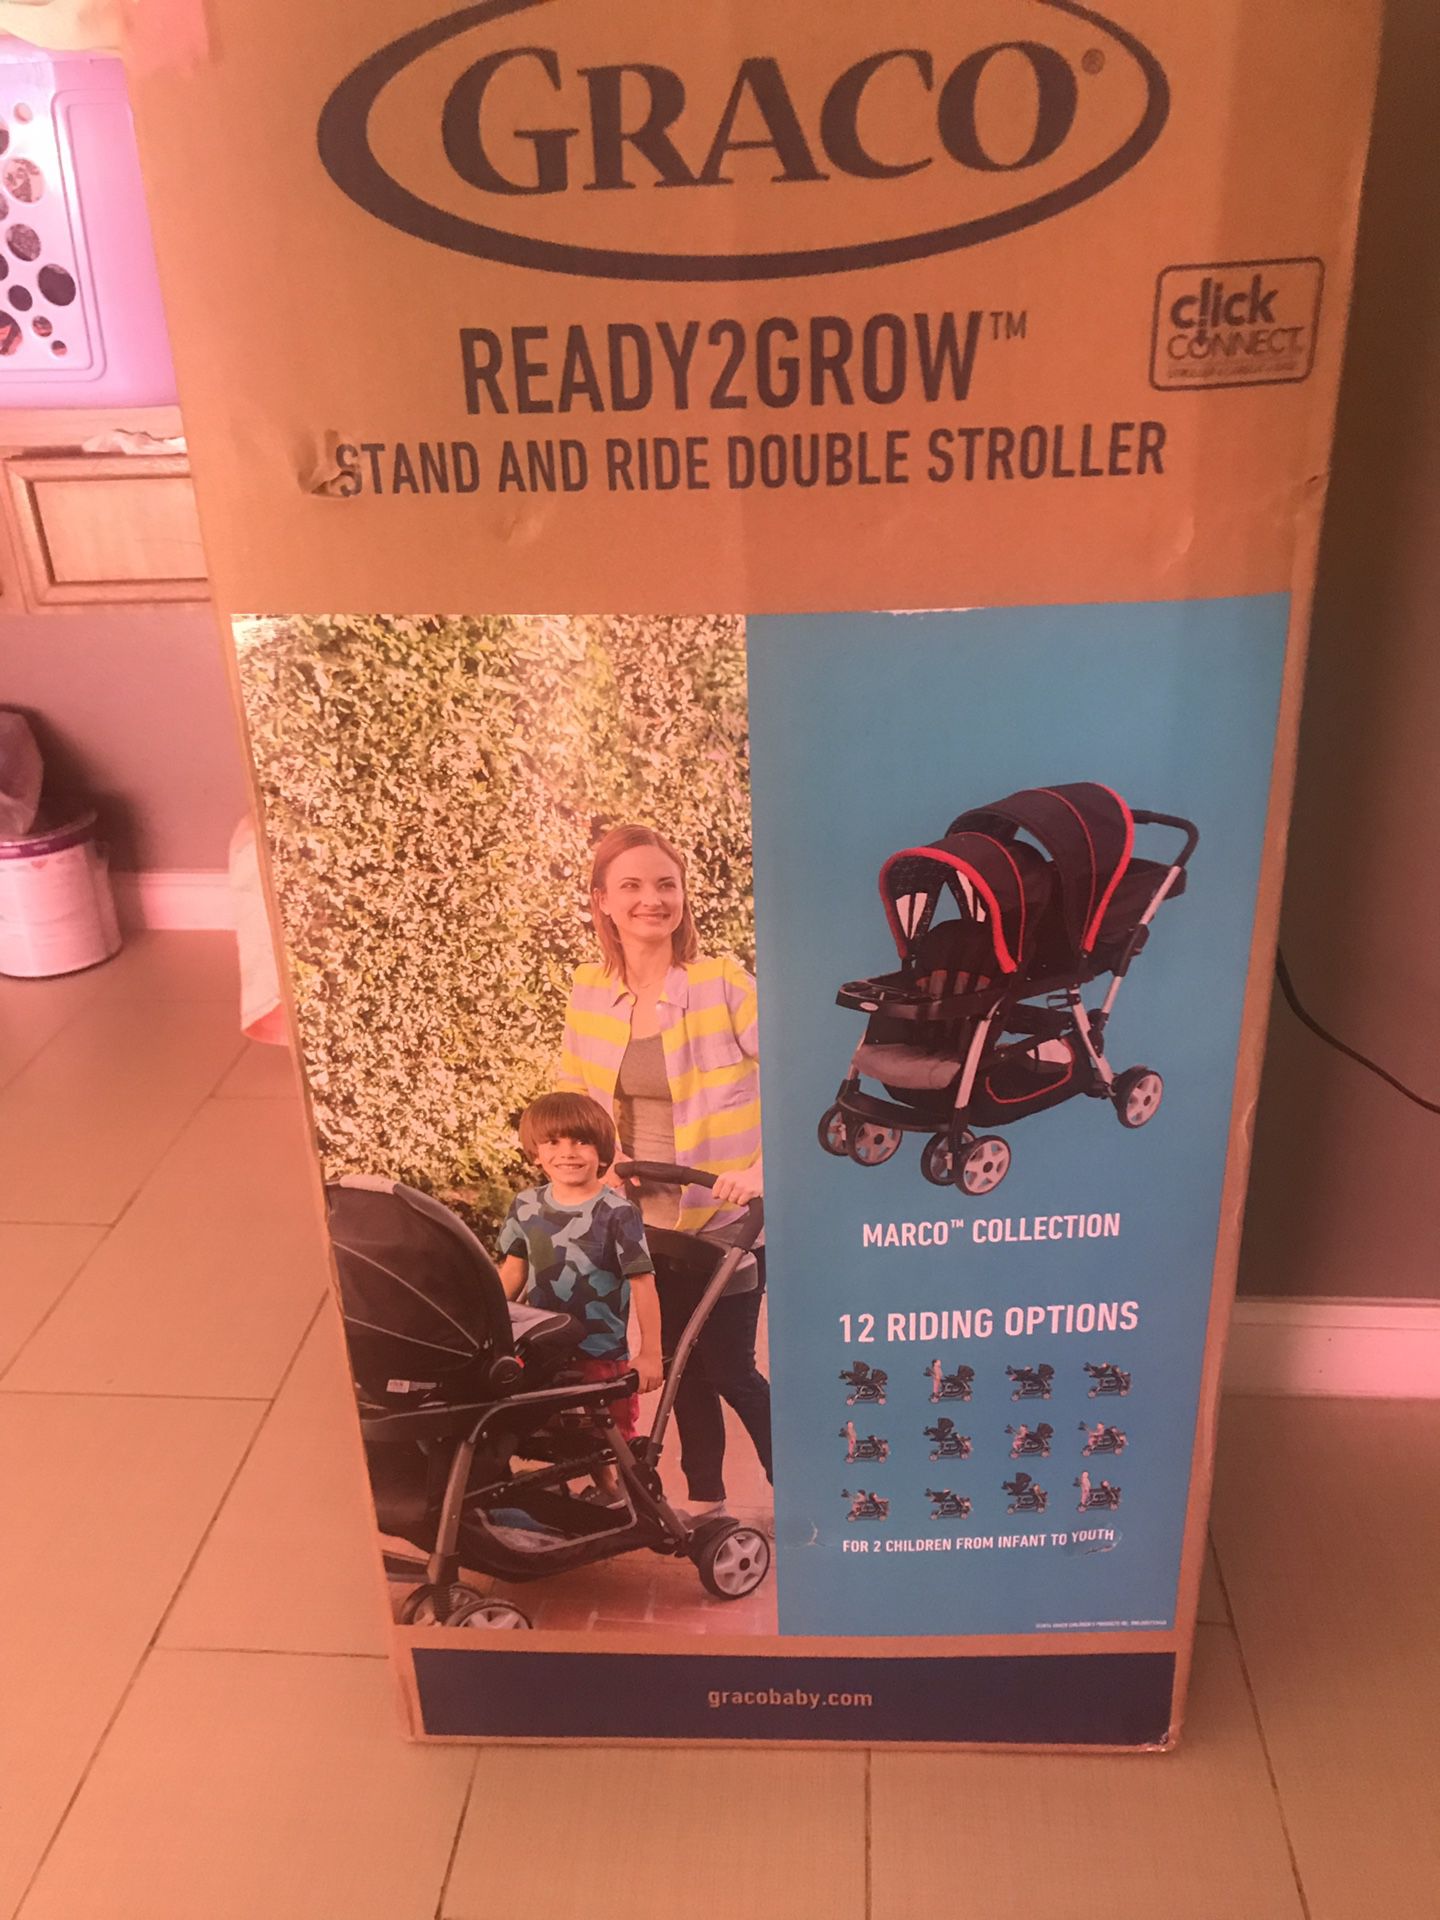 Brand new Graco ready2grow double stroller